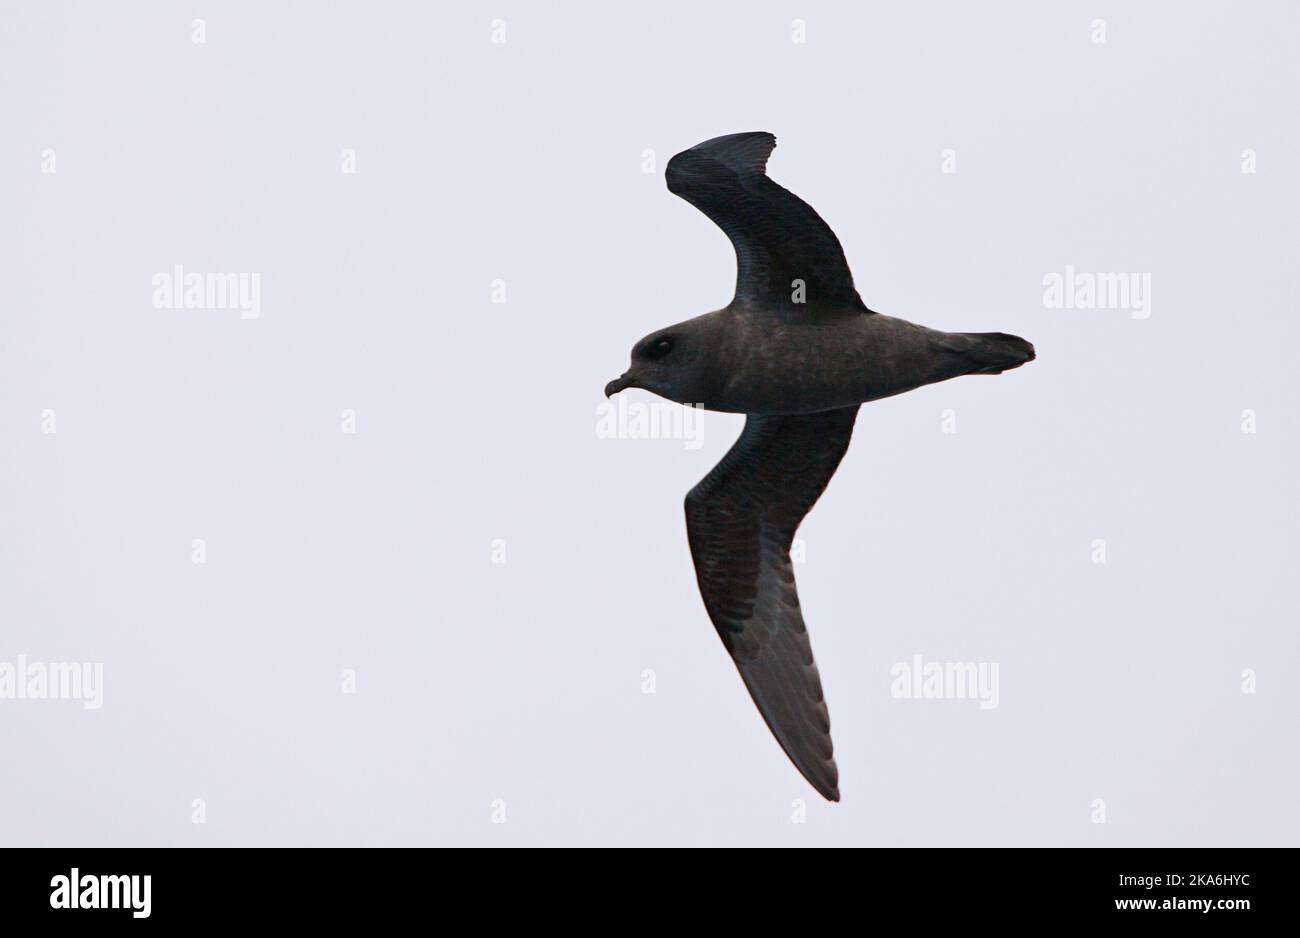 Kerguelenstormvogel vliegend; Kerguelen Petrel flying; Stock Photo